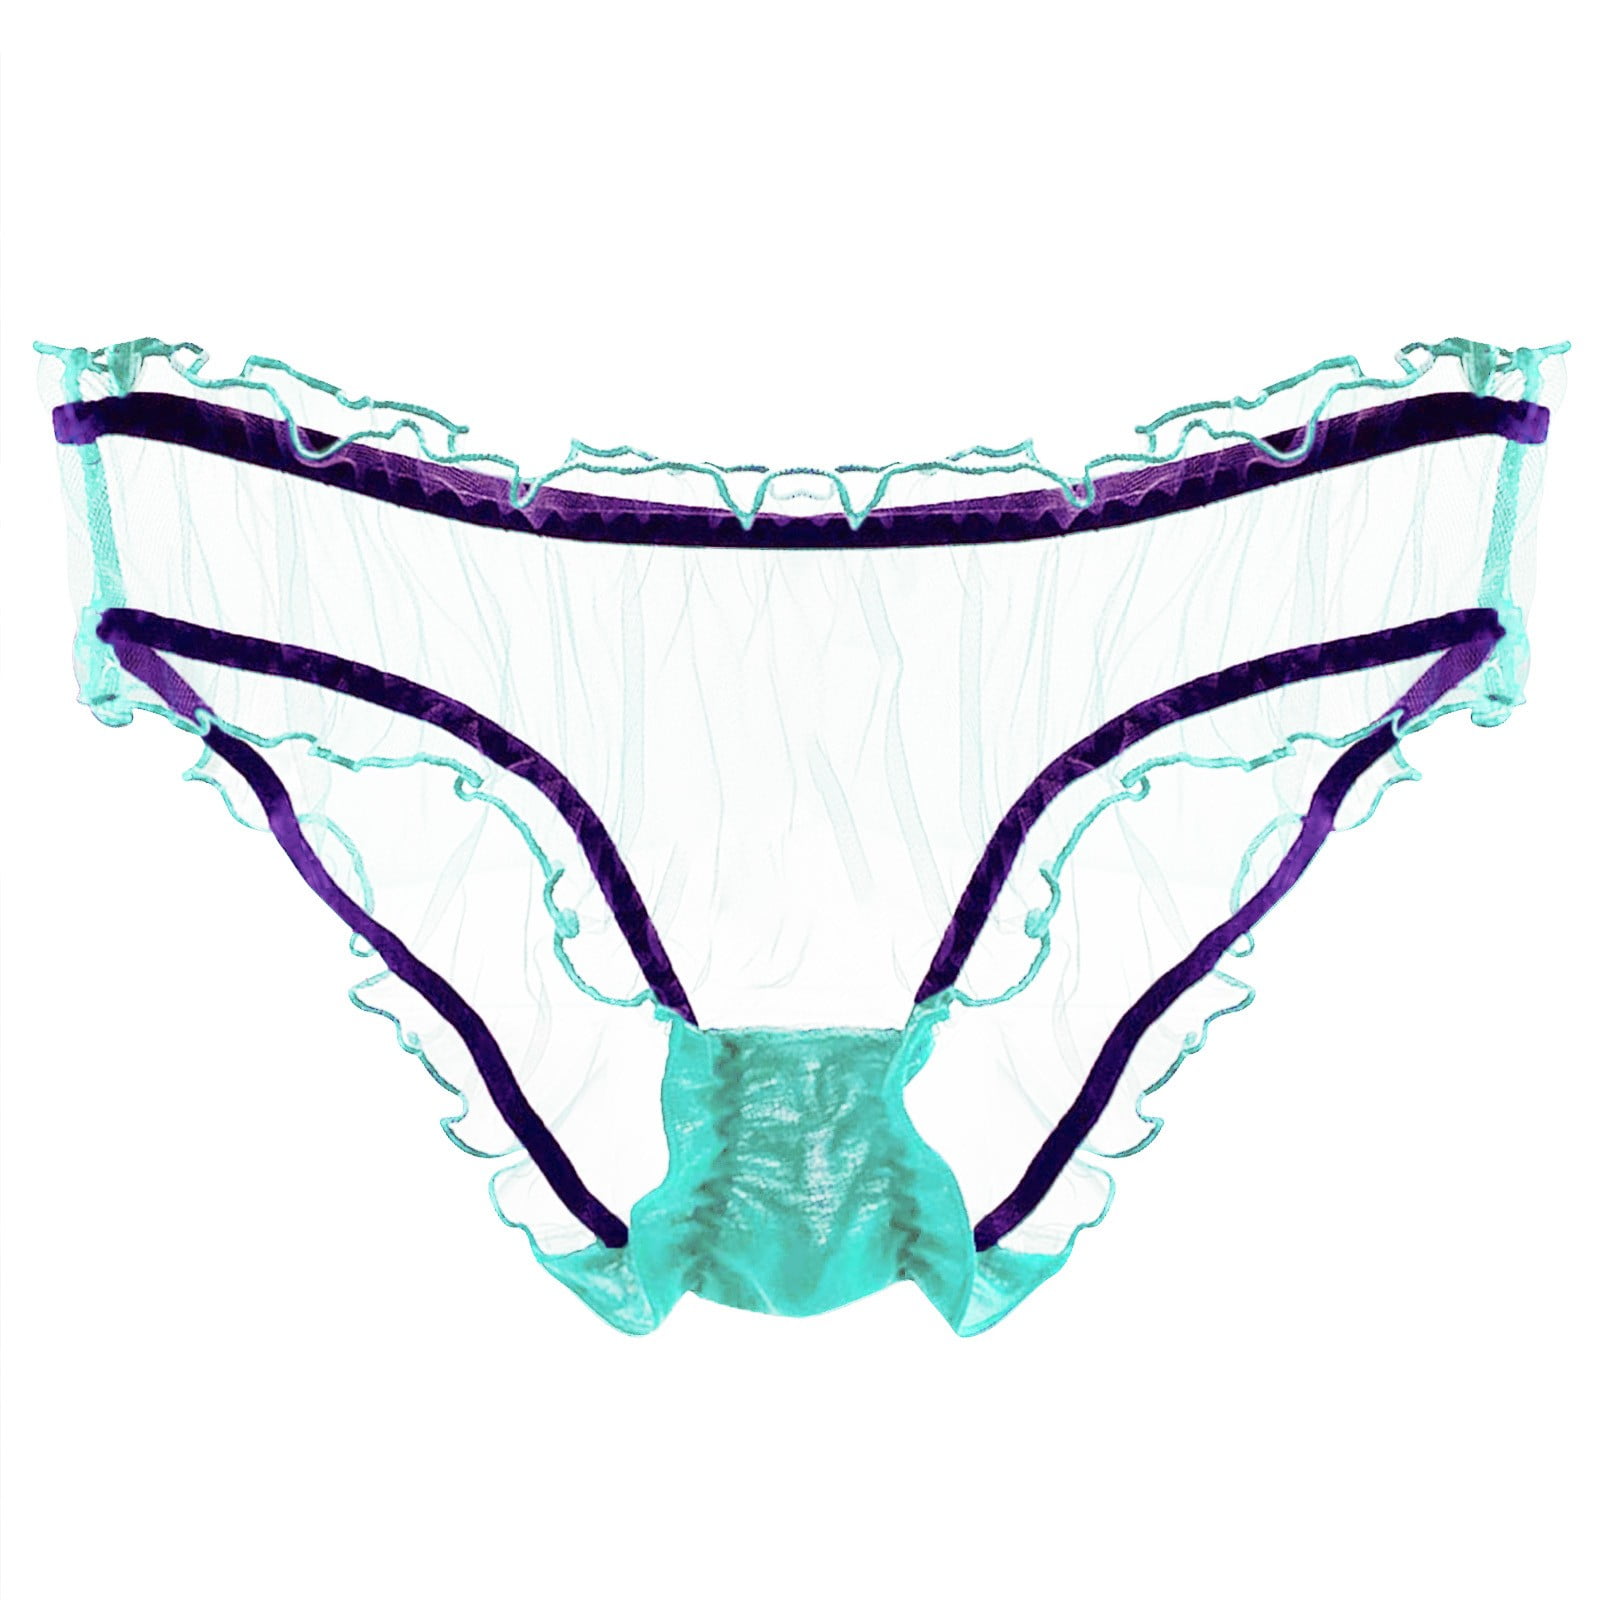 NRUDPQV women's mesh transparent panties lightweight breathable lace pure  cotton crotch low waist briefs